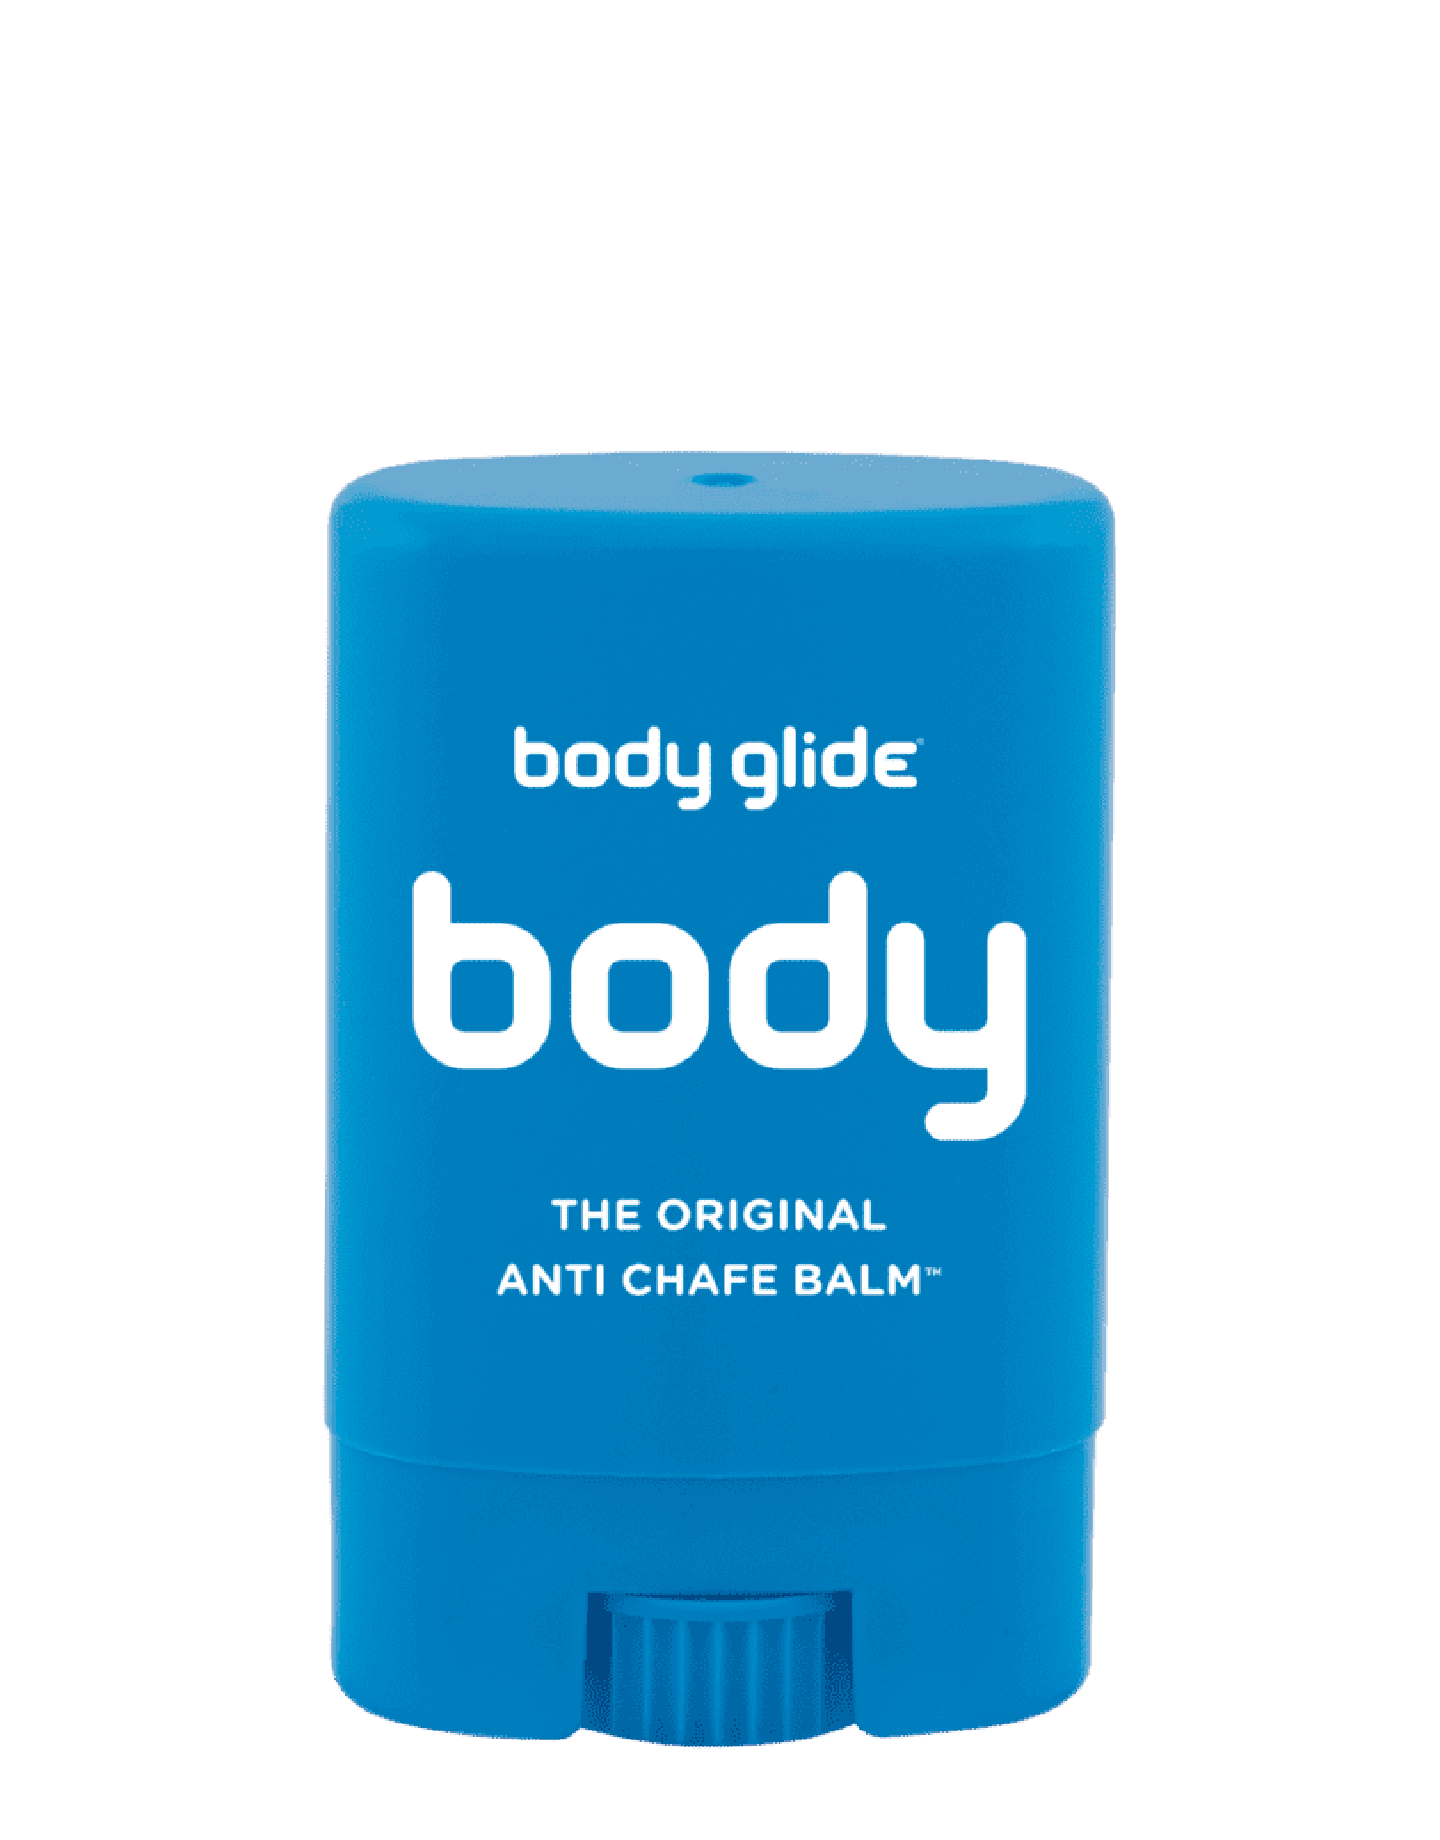 body glide Original body glide - 0.35oz pocket size